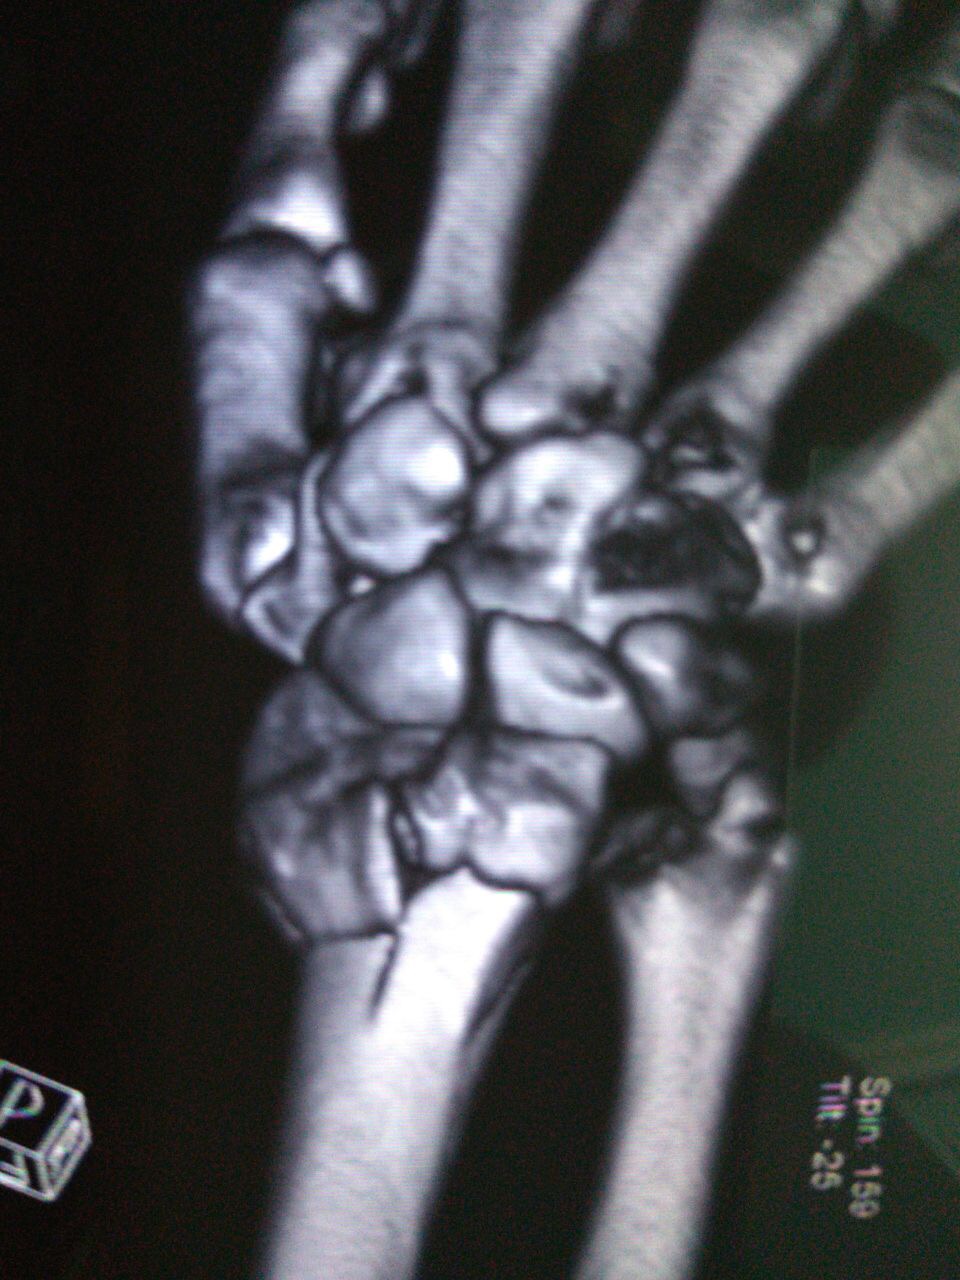 File:CT scan Wrist dorsal view.JPG